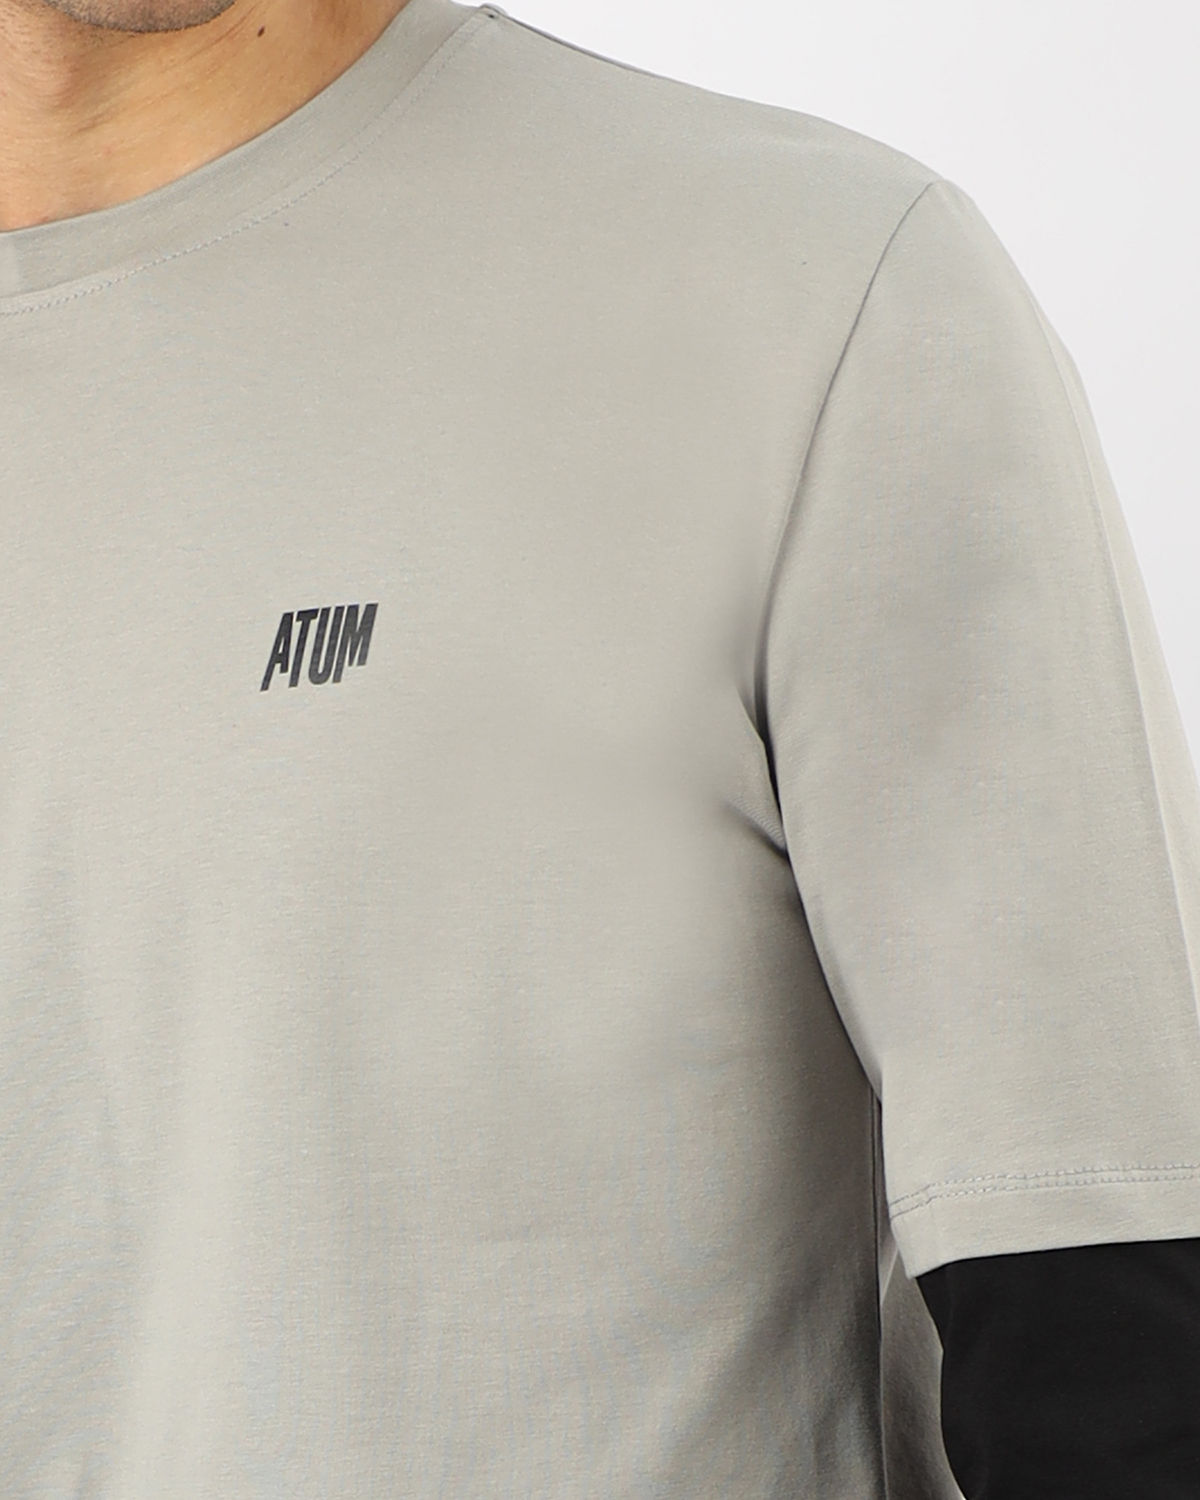 Atum Men's Cotton T-Shirt - Atum Egypt #